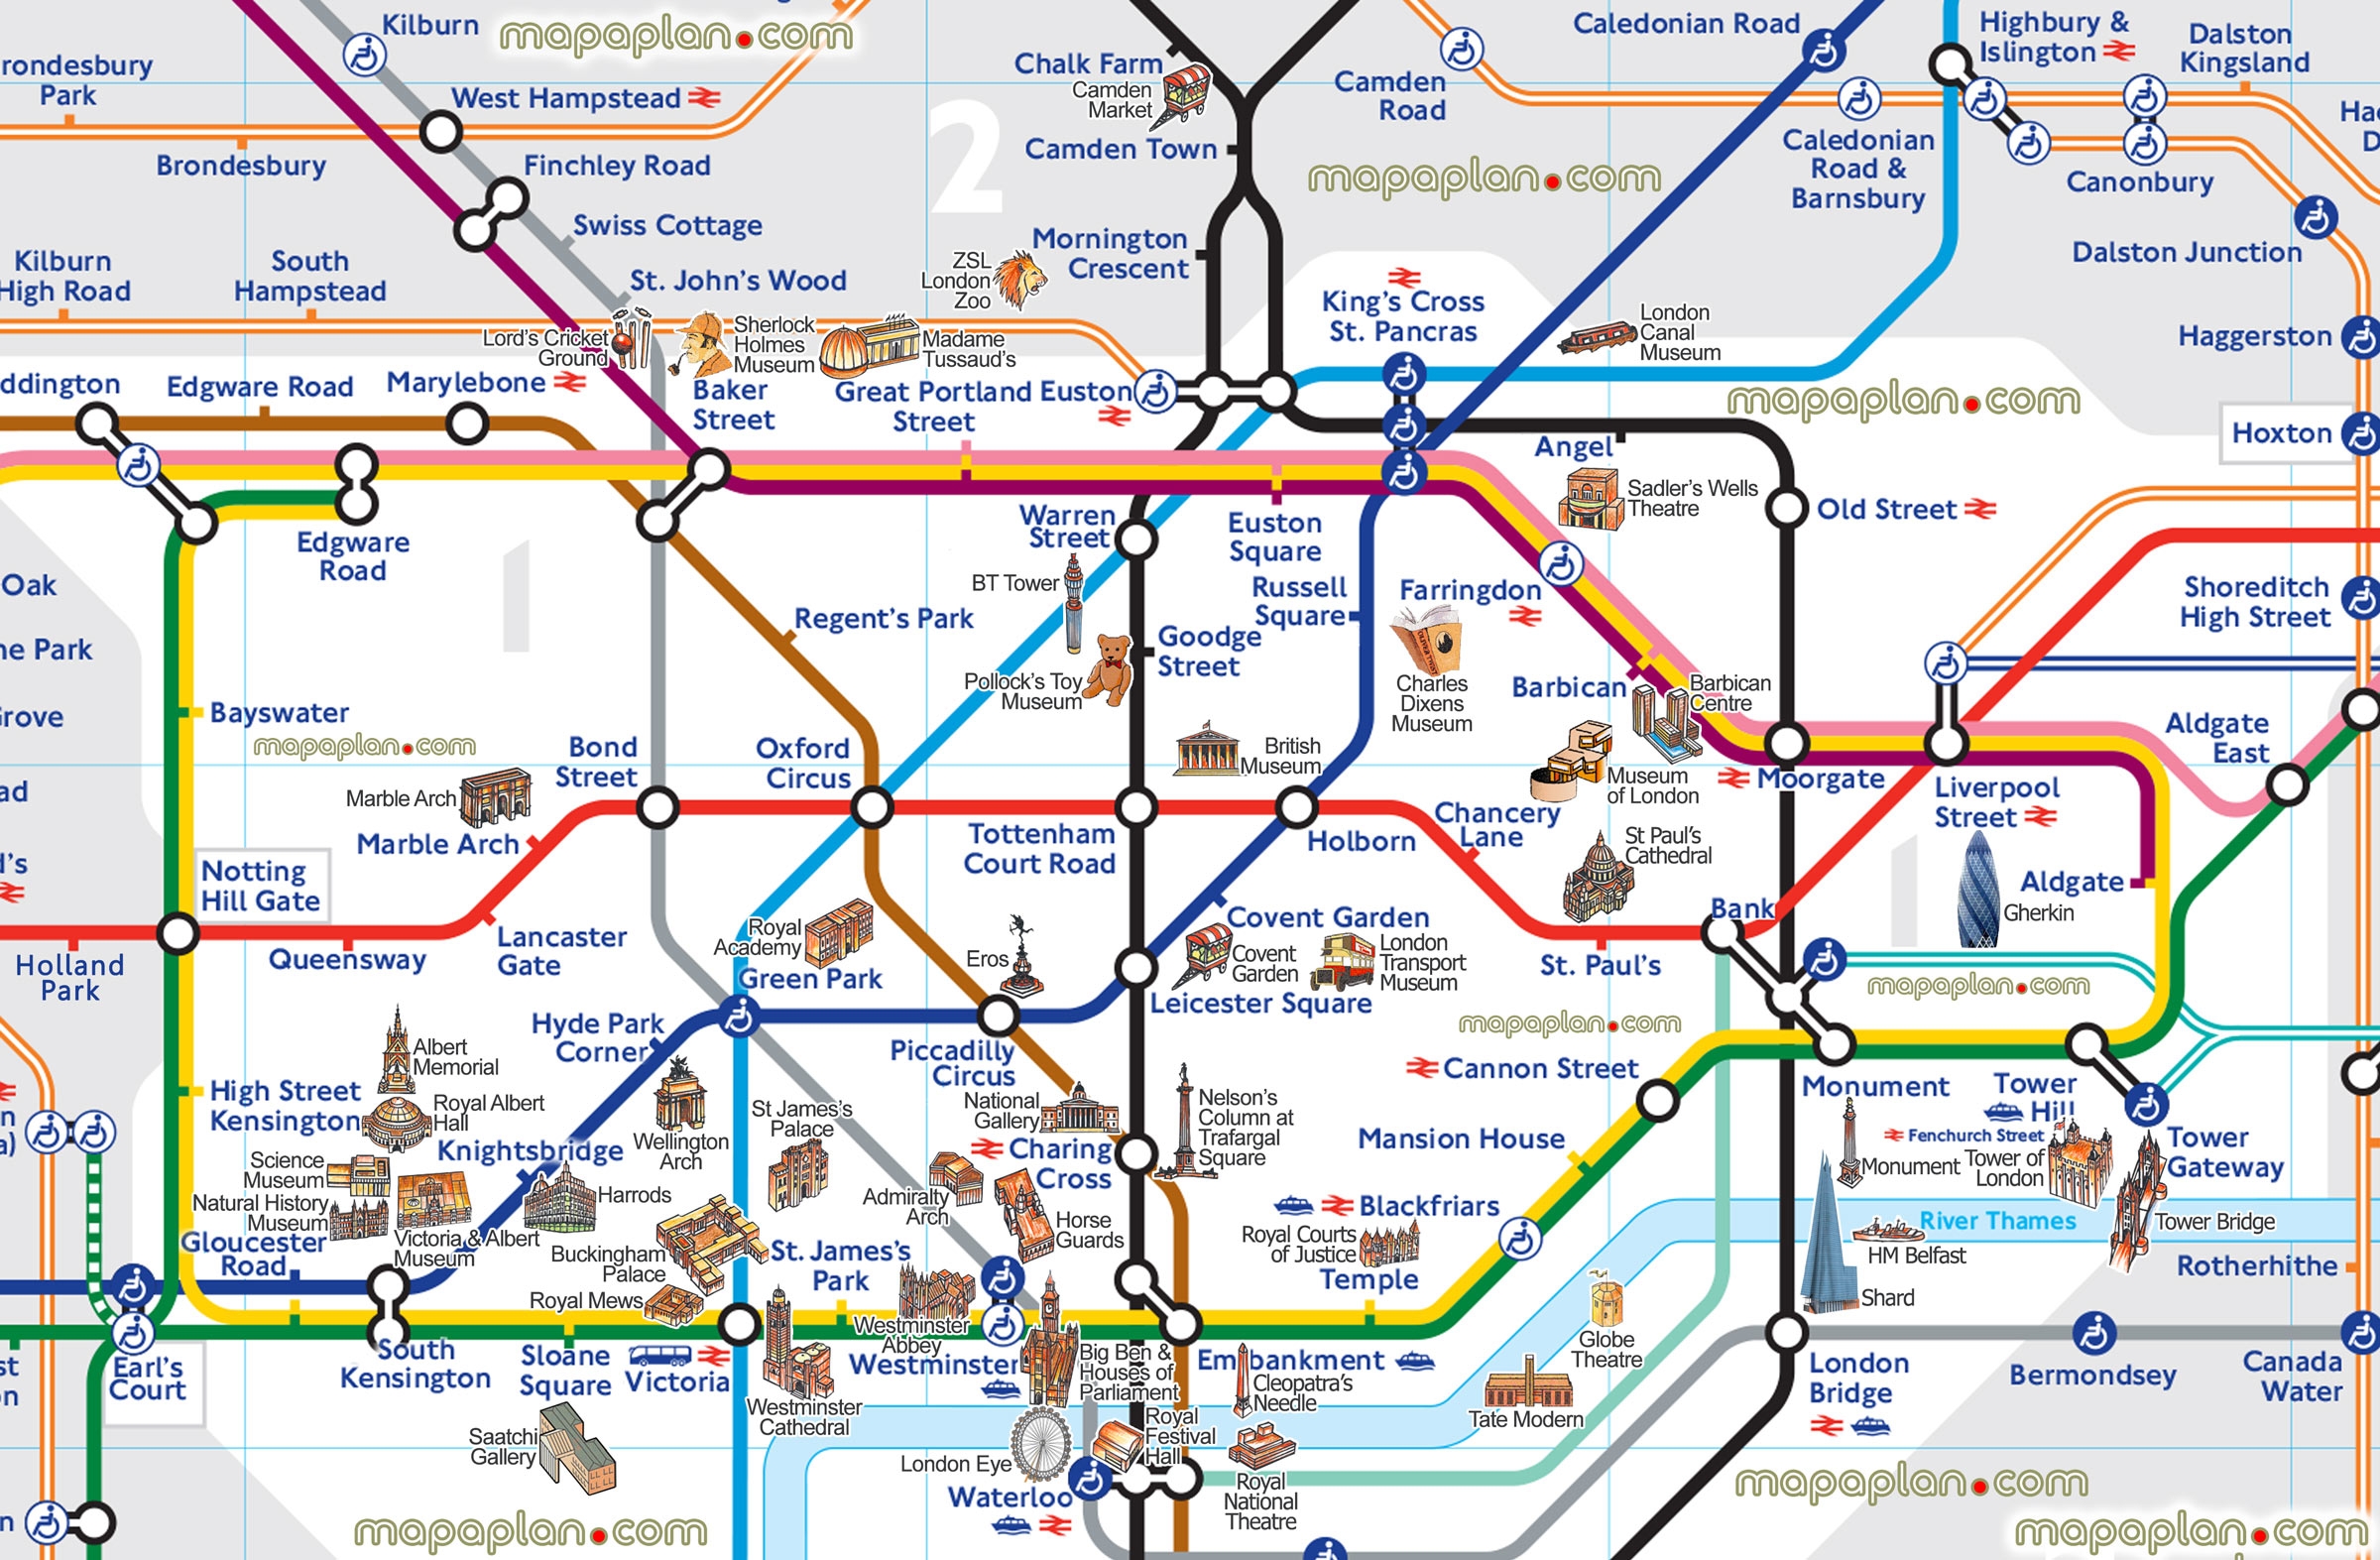 london-stations-underground-map